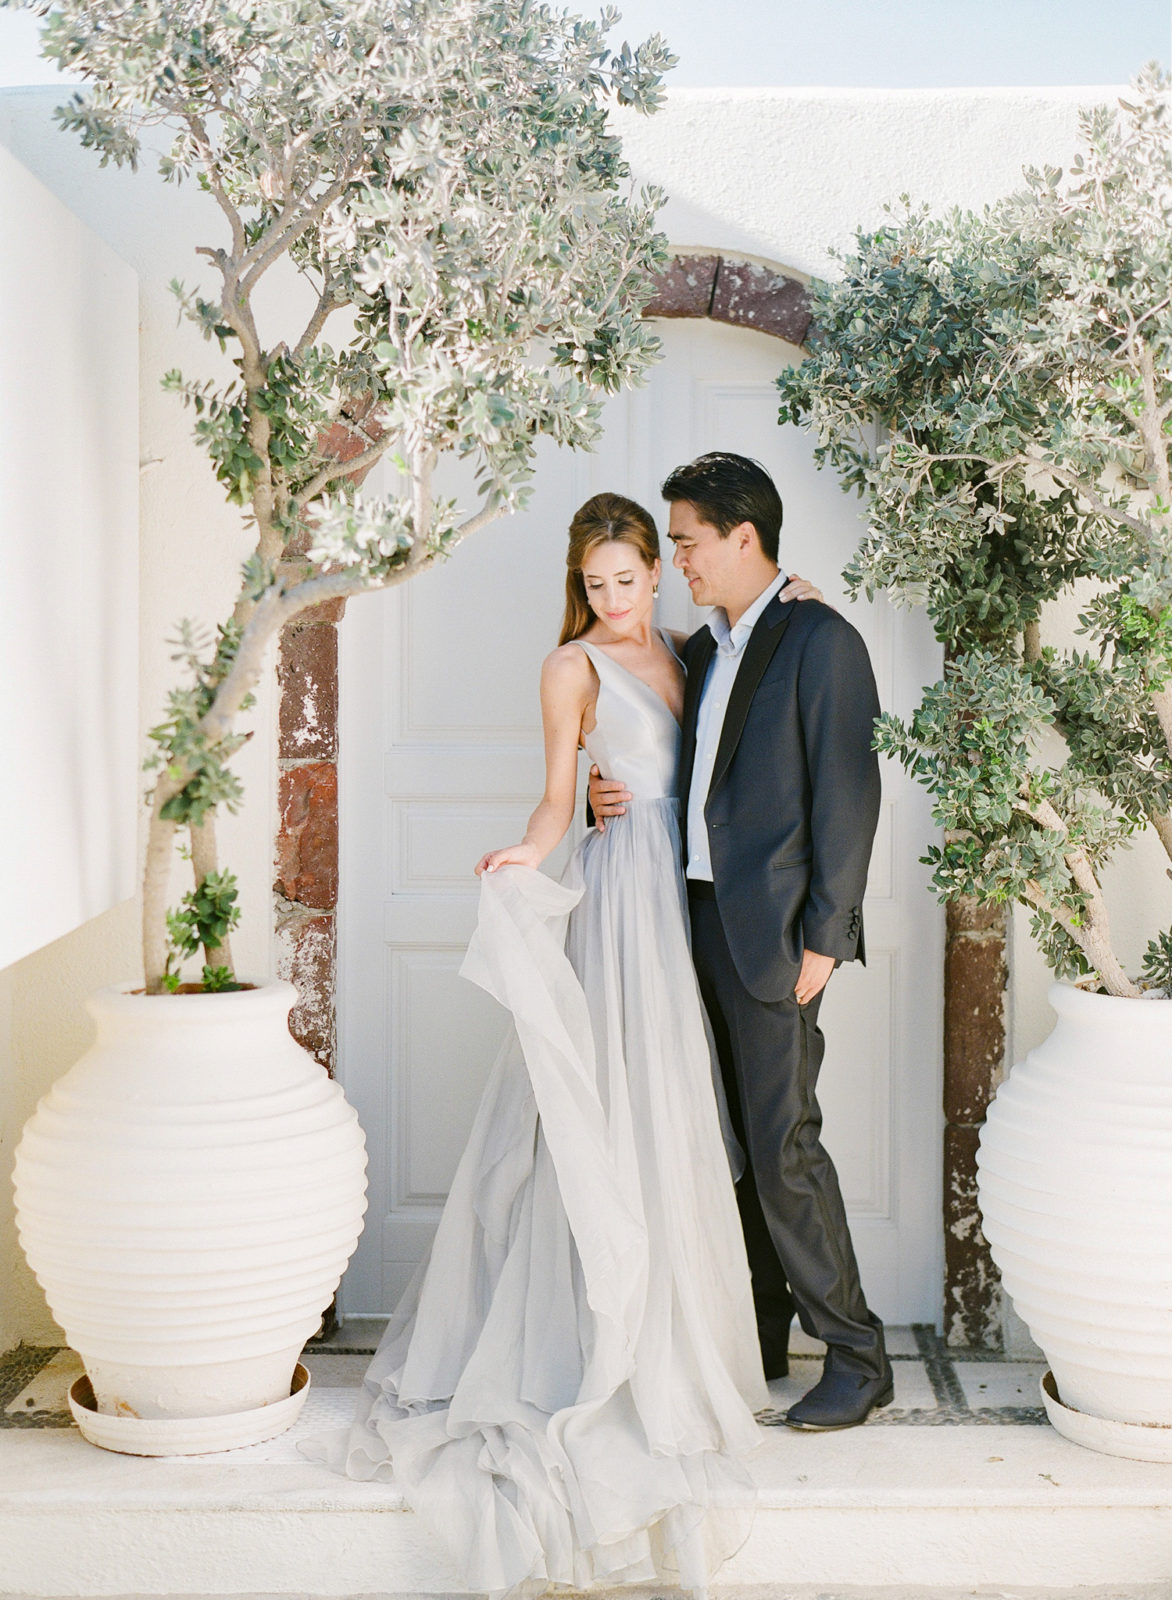 Greece Wedding Photographer | Santorini Wedding Photography | Oia Elopement | Europe Film Photographer | Molly Carr Photography | Jennifer Fox Weddings | Harold James